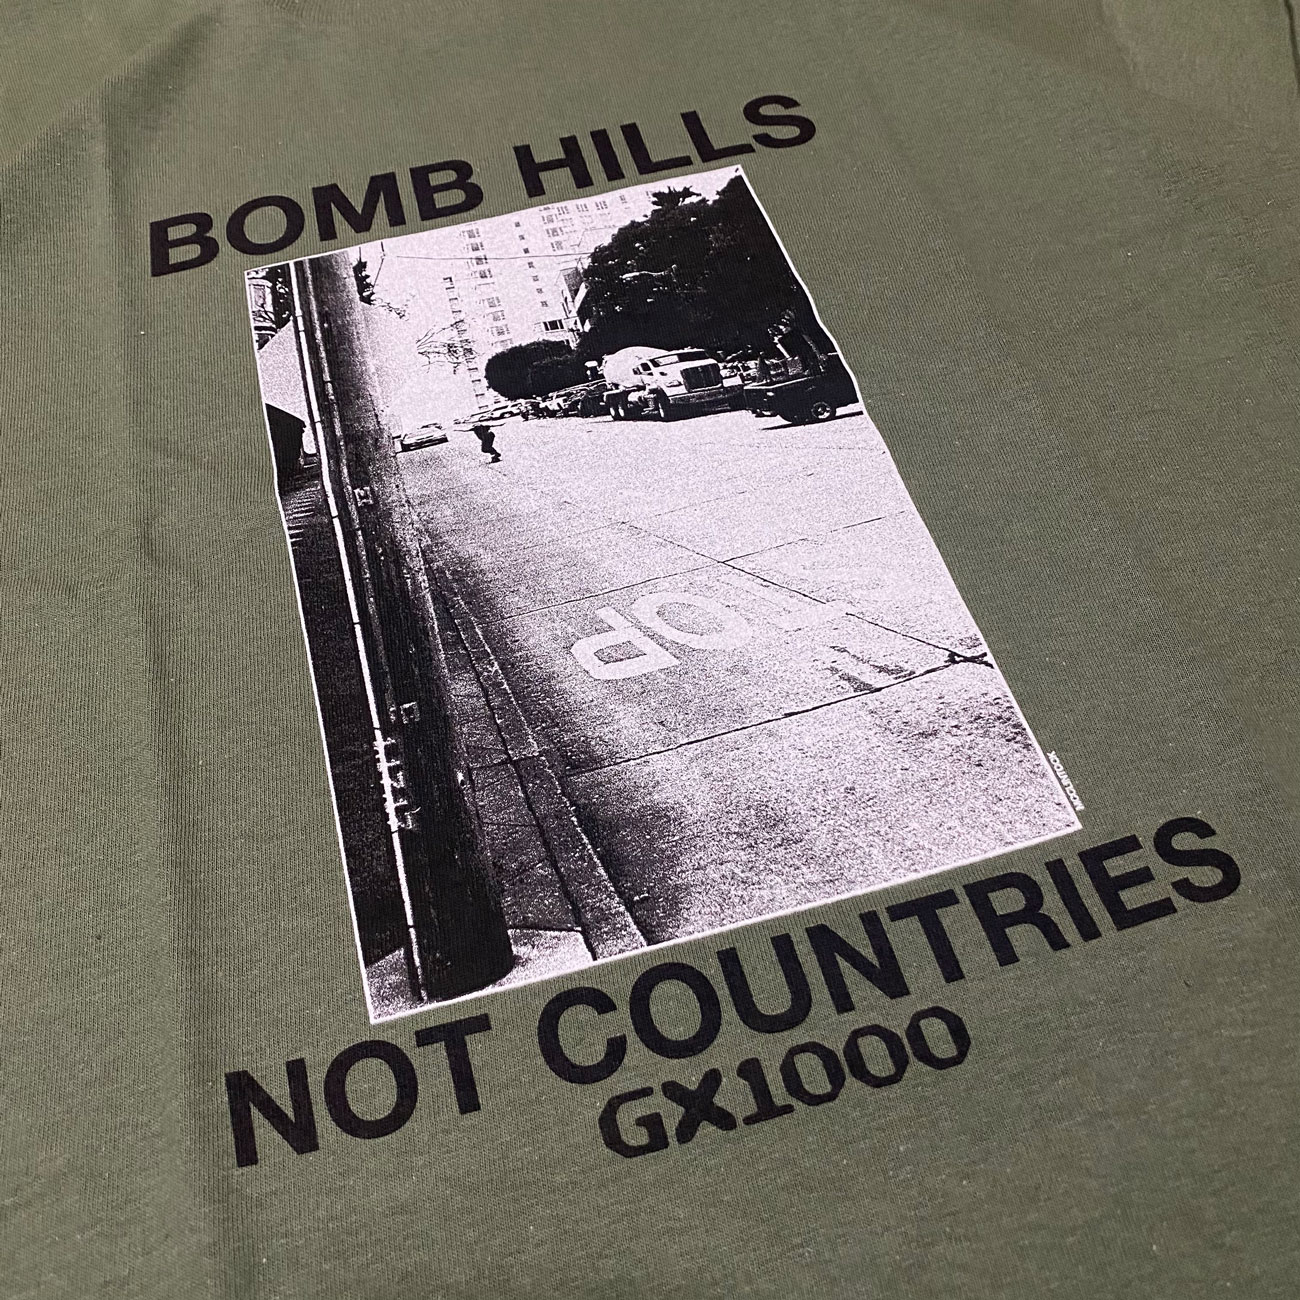 GX1000 BOMB HILLS NOT COUNTRIES TEE